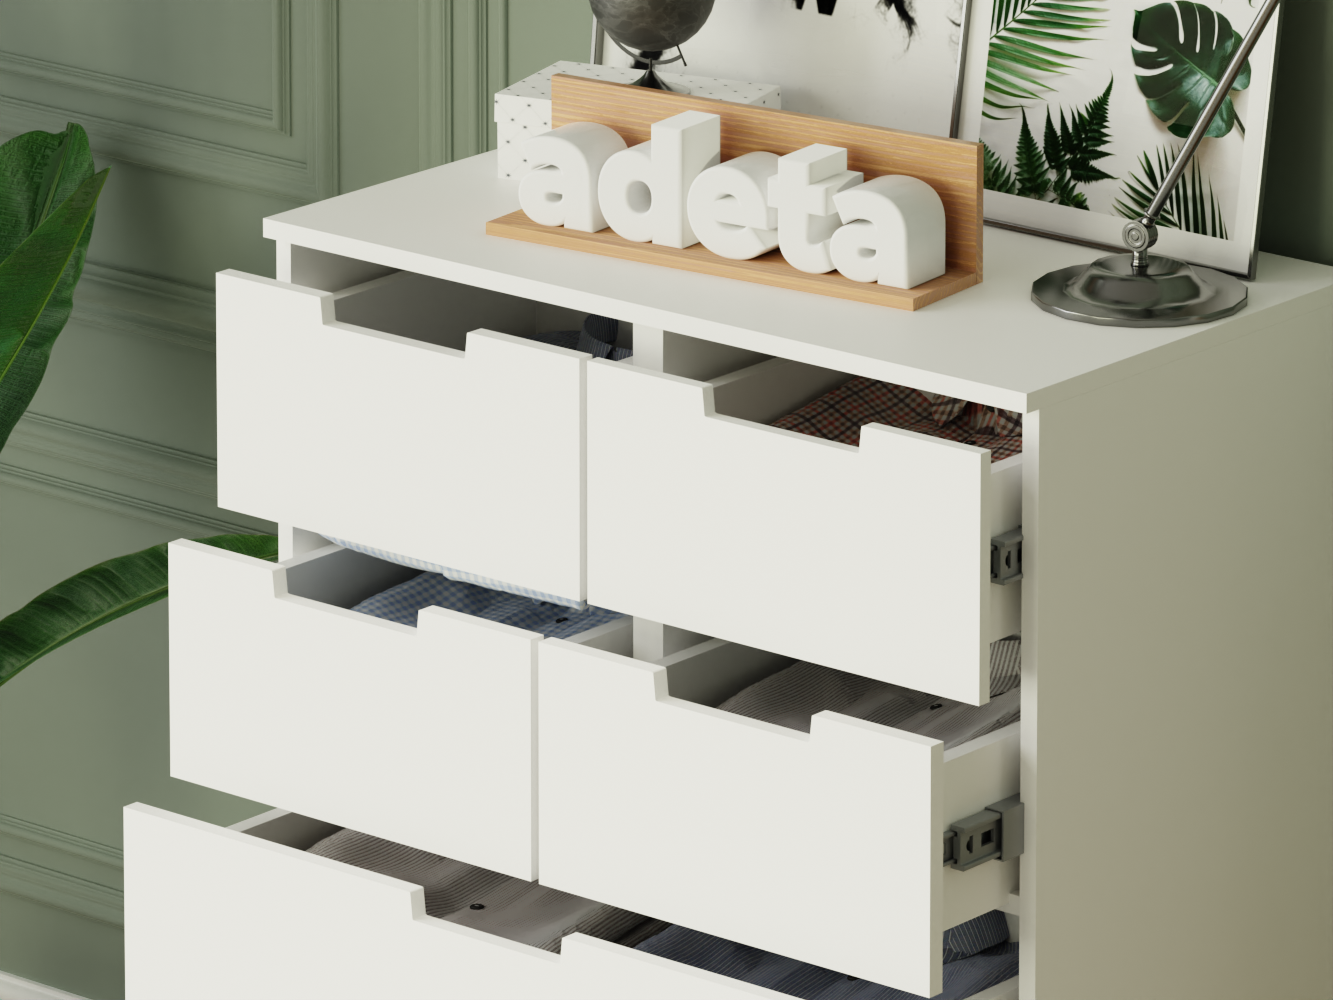 Изображение товара Комод Нордли 15 white ИКЕА (IKEA), 60x45x110 см на сайте adeta.ru